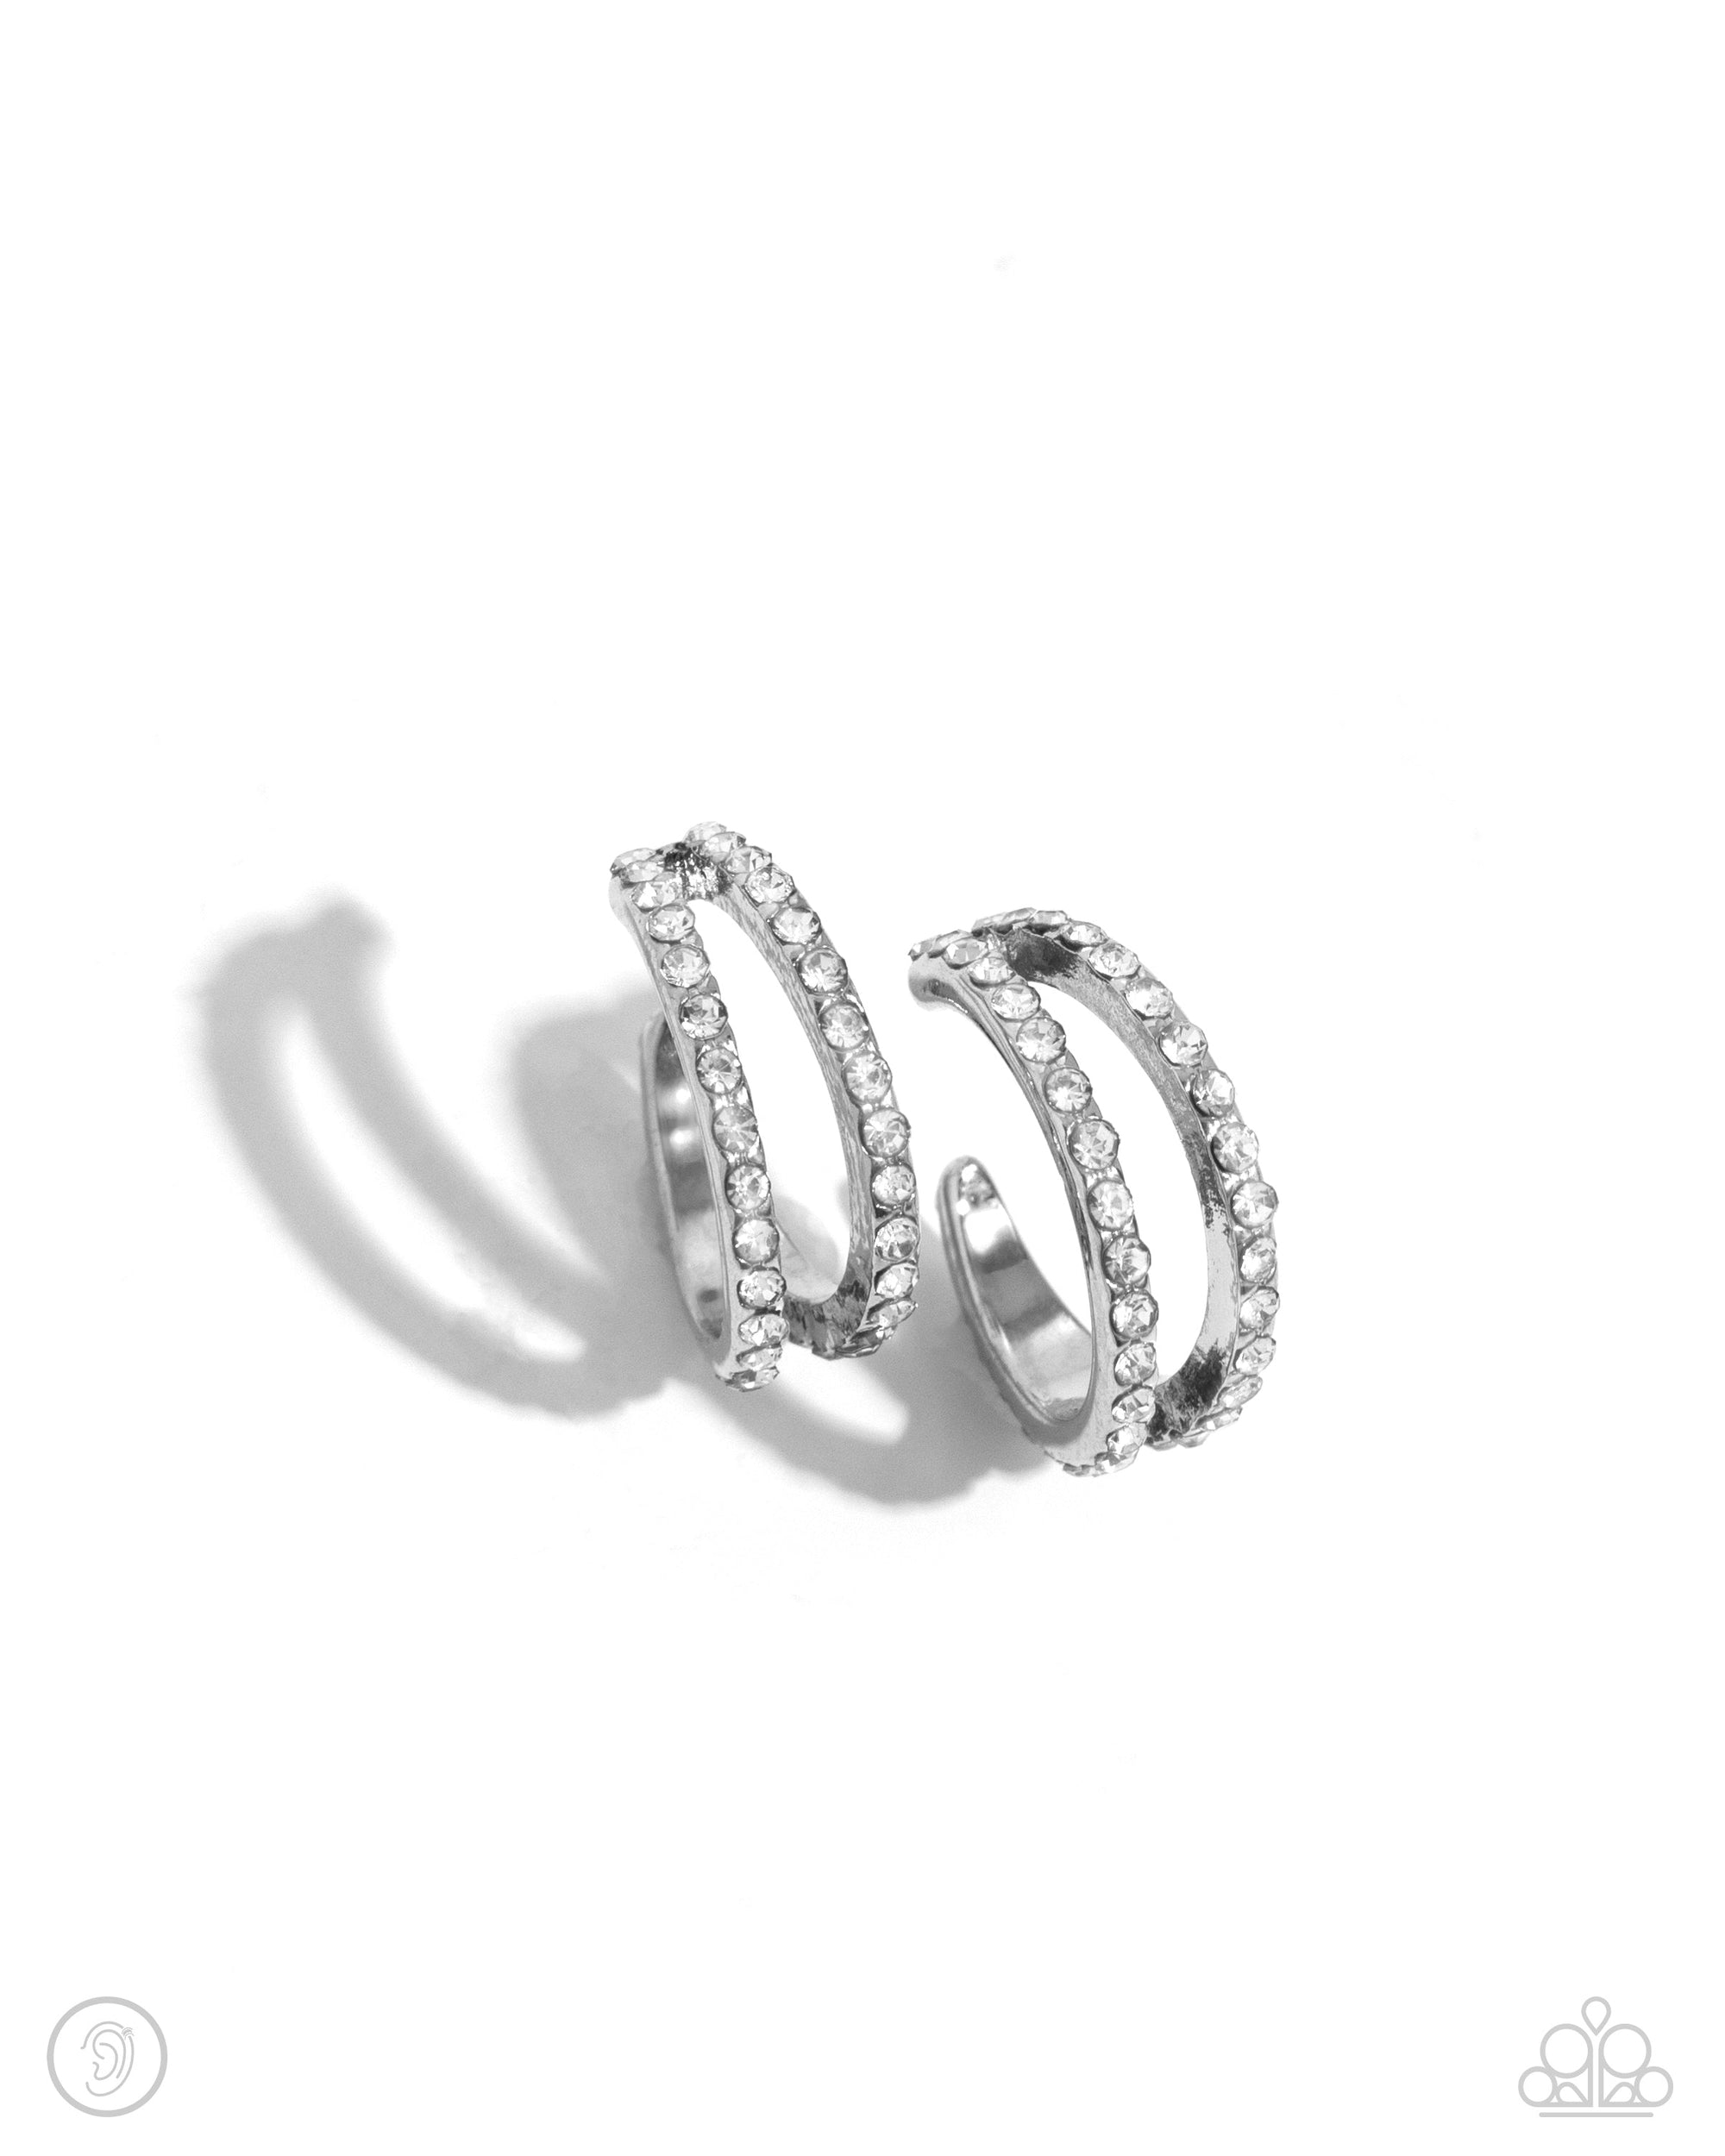 Monochromatic Mystique White Rhinestone Cuff Earring - Paparazzi Accessories- lightbox - CarasShop.com - $5 Jewelry by Cara Jewels